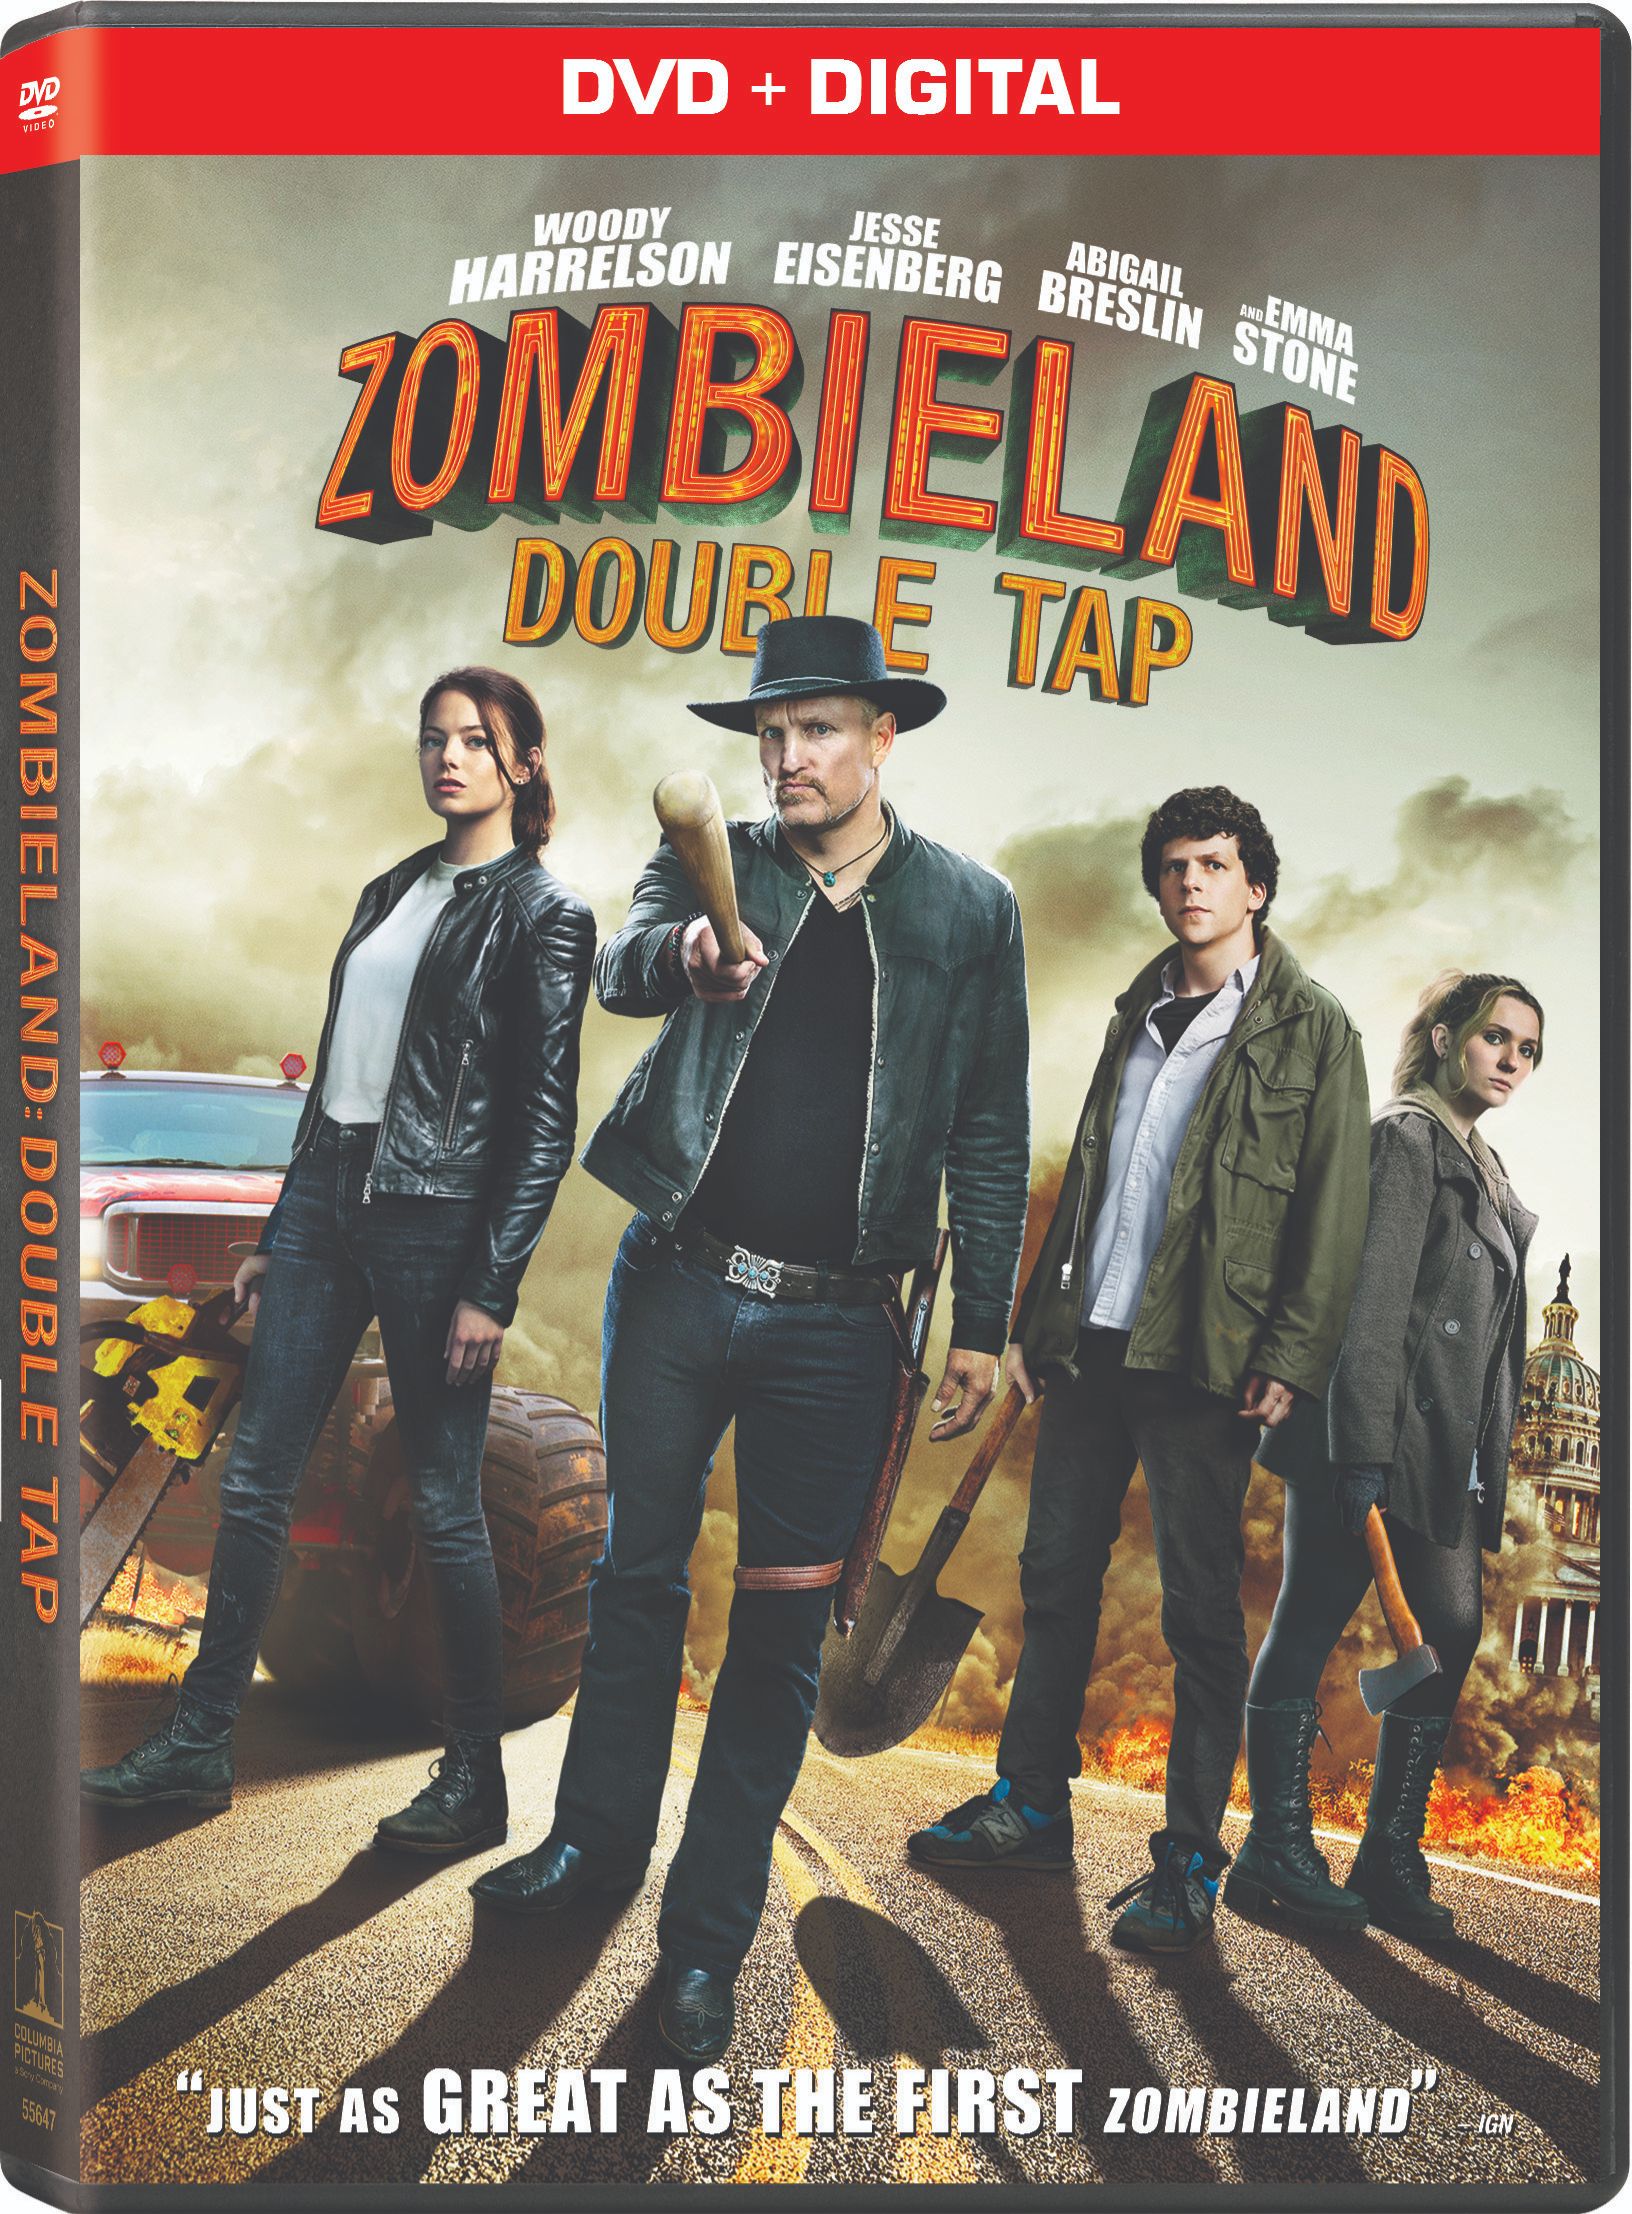 Zombieland: Double Tap DVD